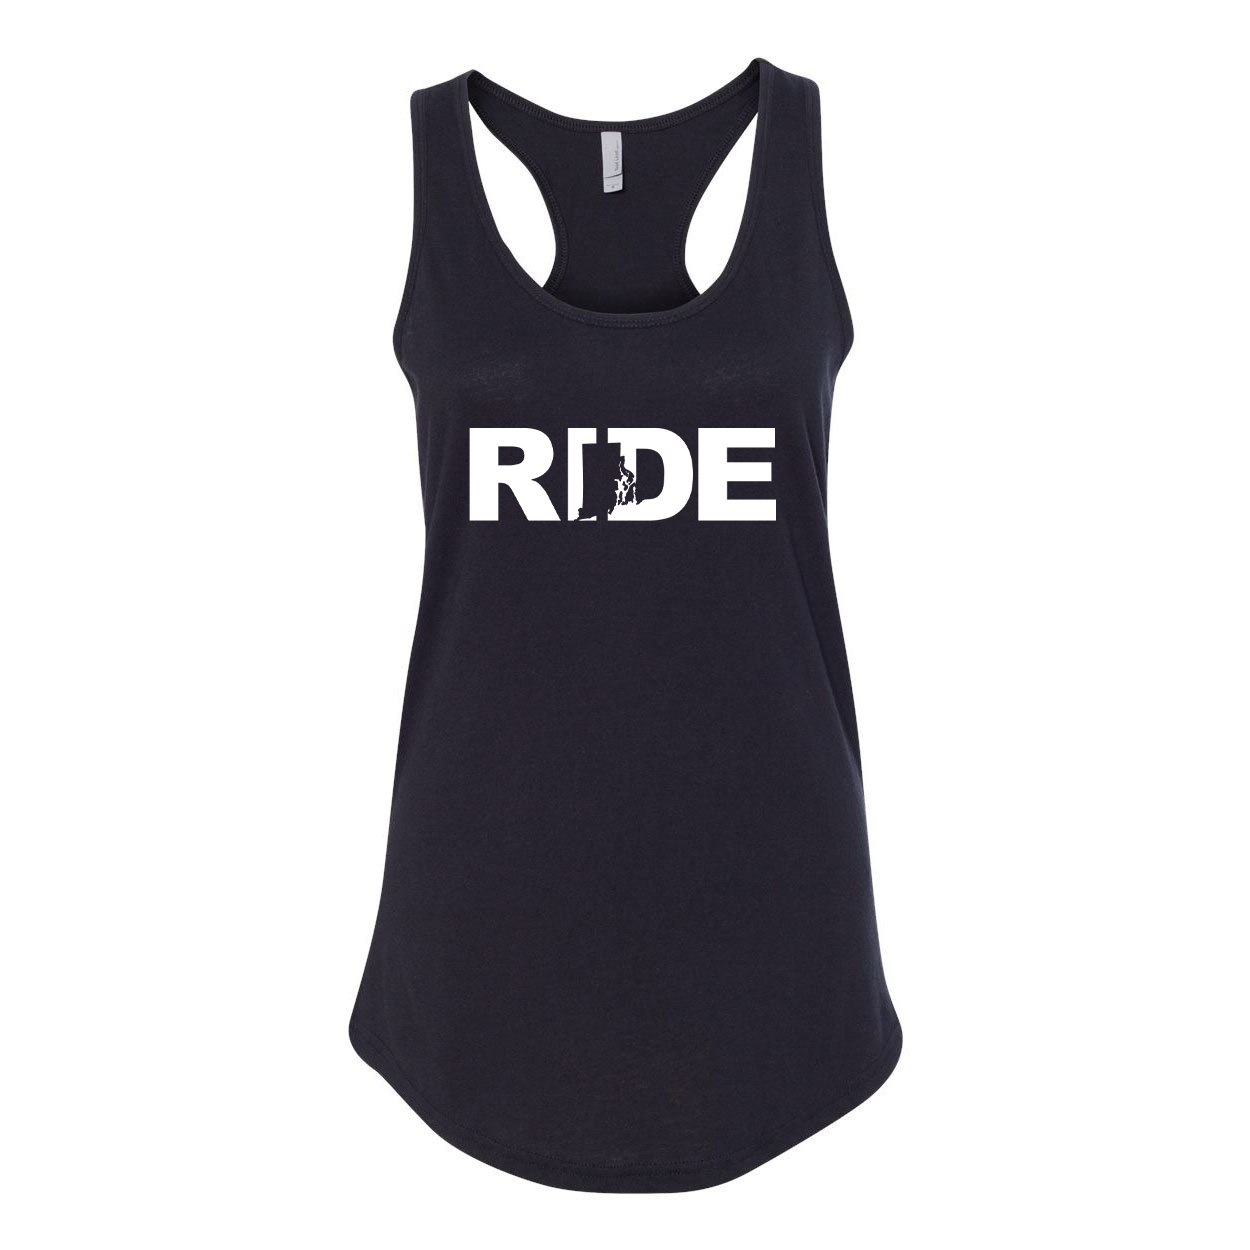 Ride Rhode Island Classic Women's Racerback Tank Top Black (White Logo)